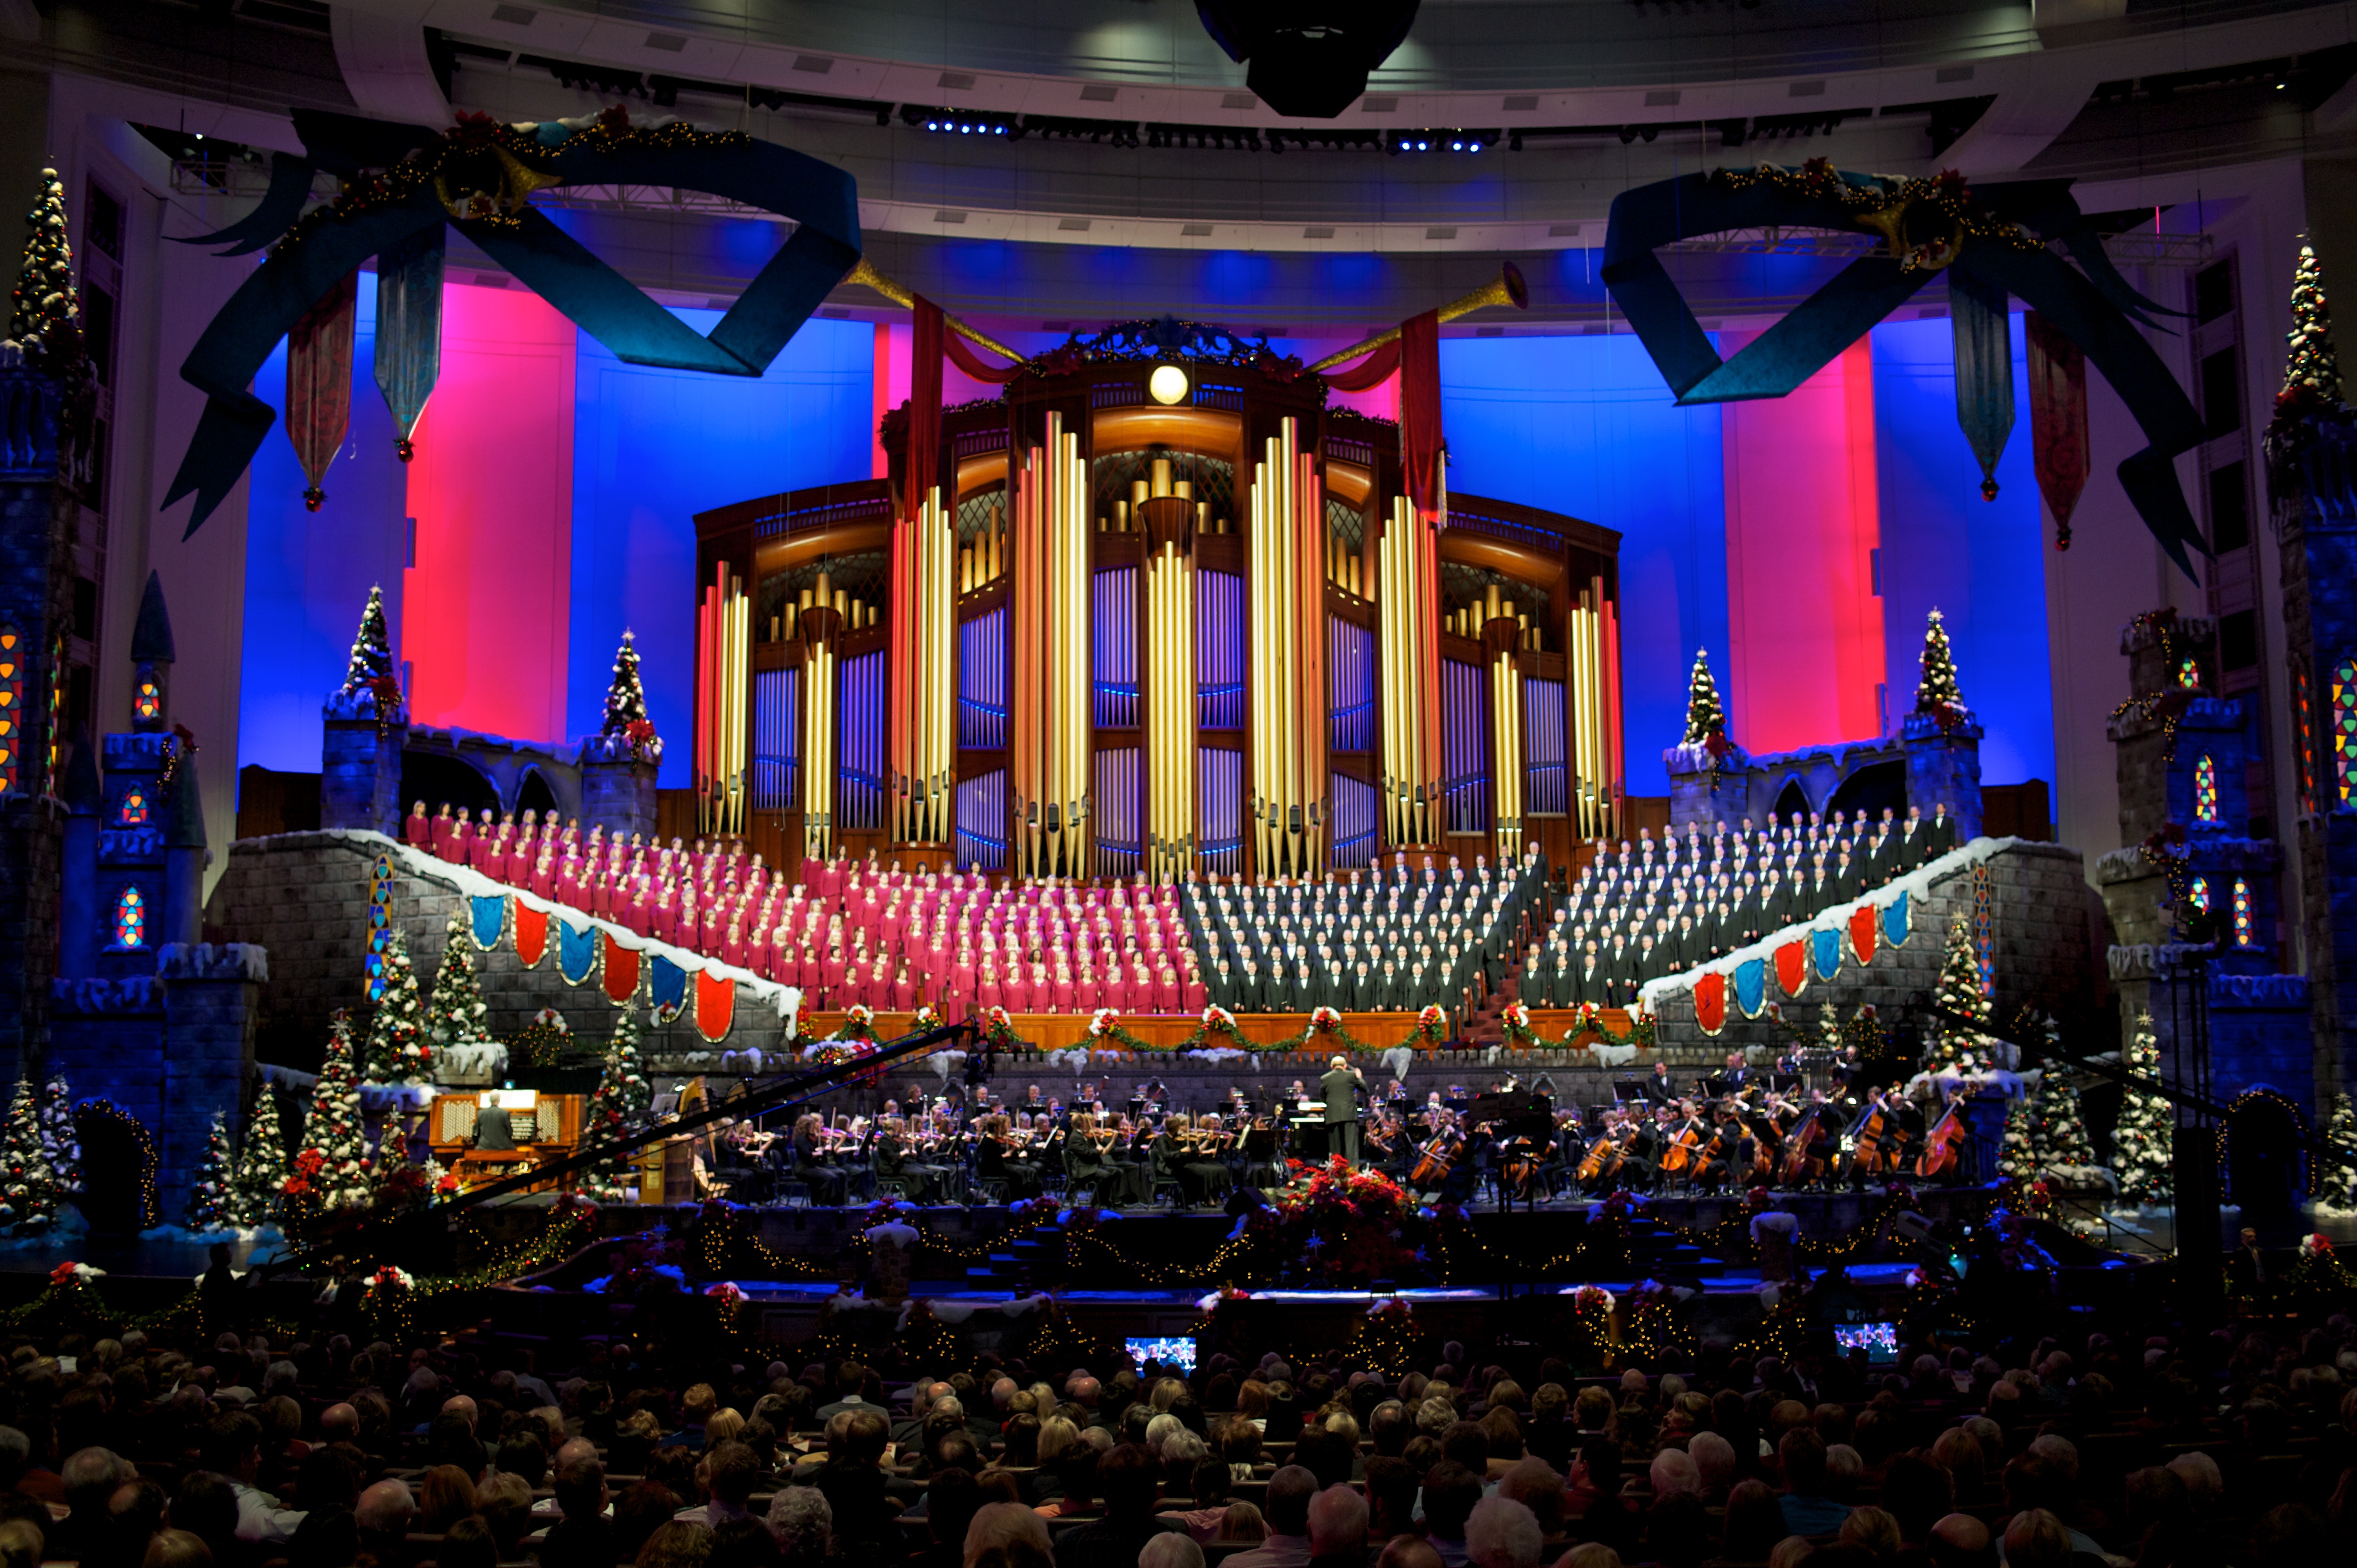 Review Of 2022 Tabernacle Choir Christmas Concert Length Photos World Map